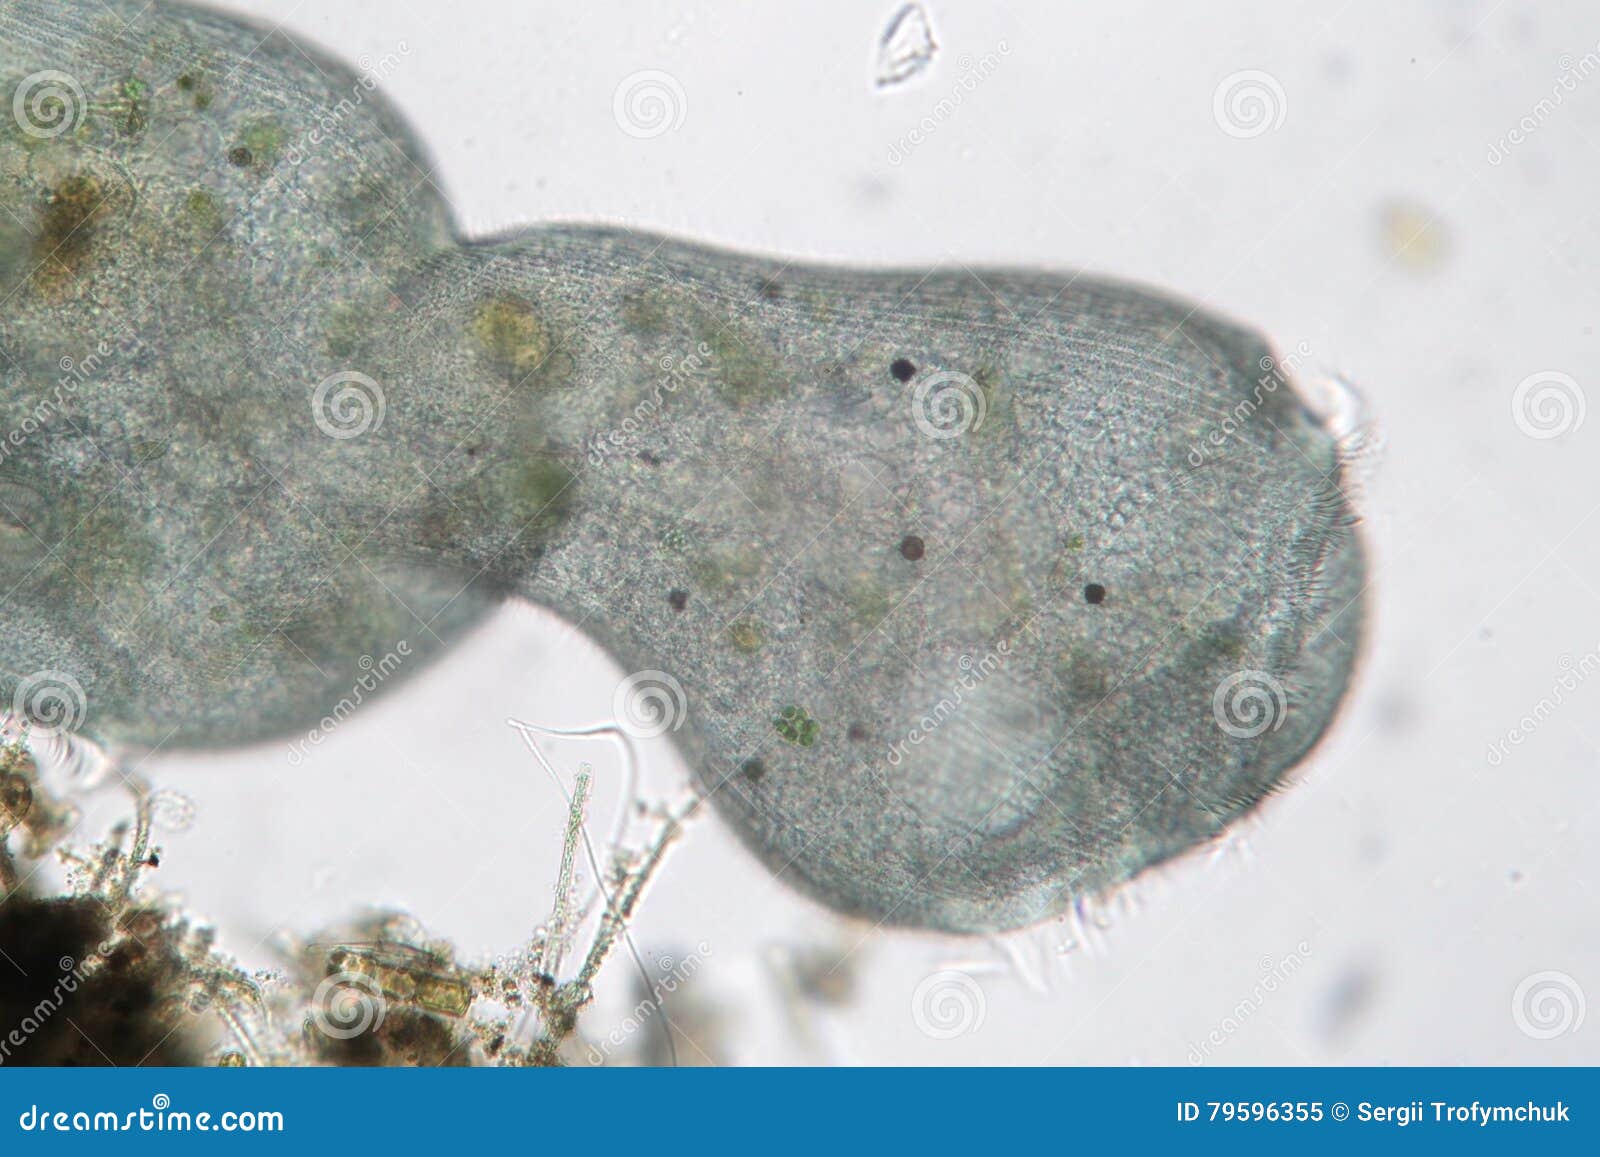  transformation of stentor or trumpet animalcules. filter-feeding microorganism, heterotrophic protozoan ciliate